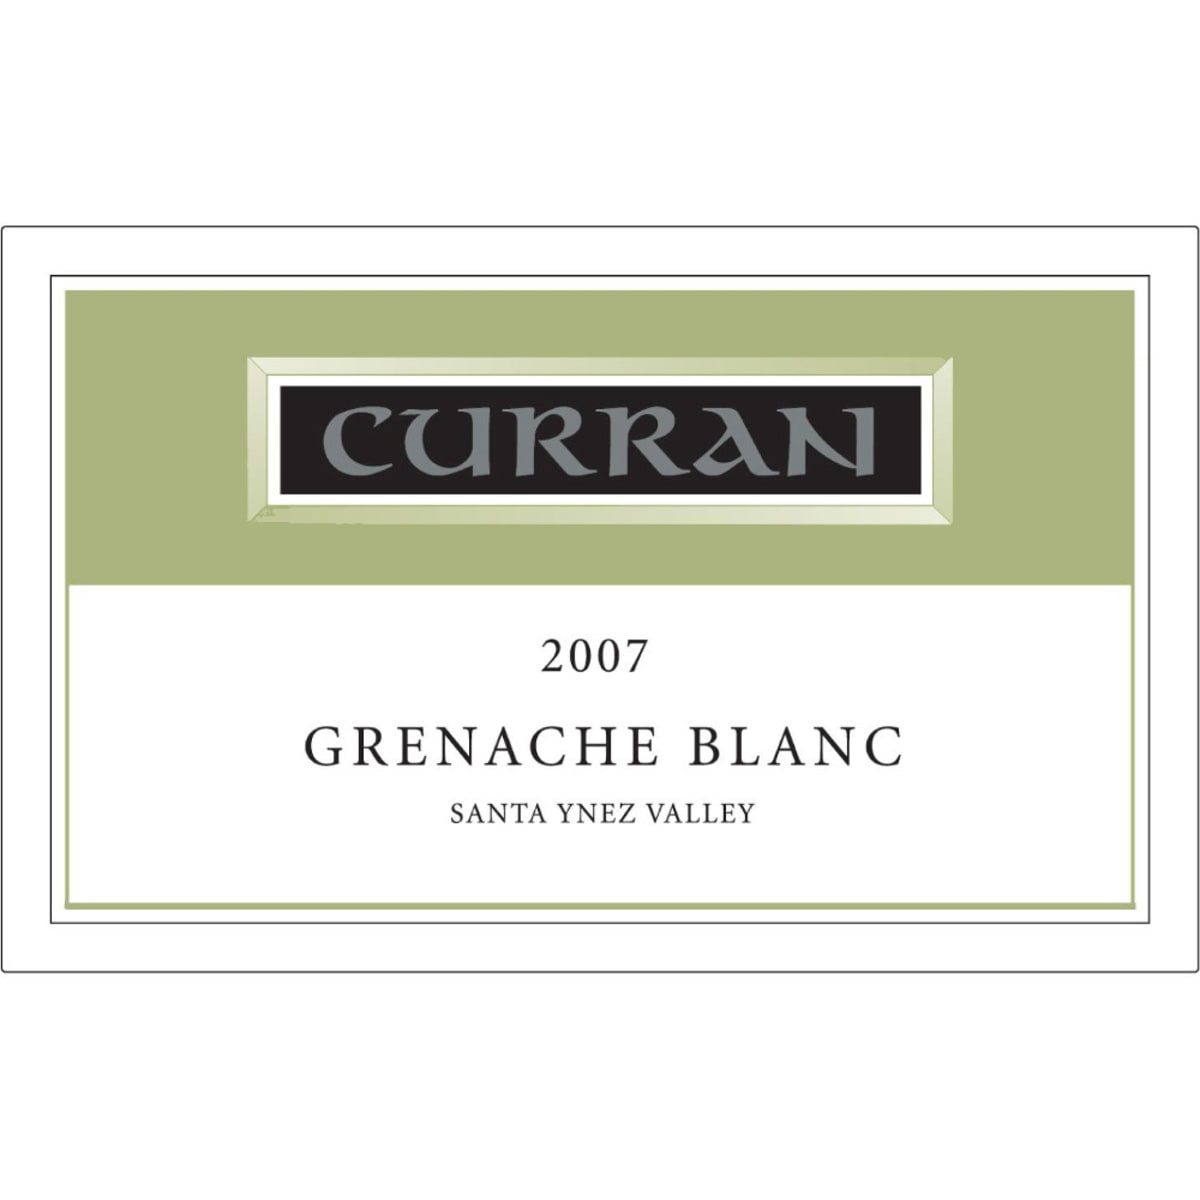 Curran Grenache Blanc 2007 Front Label